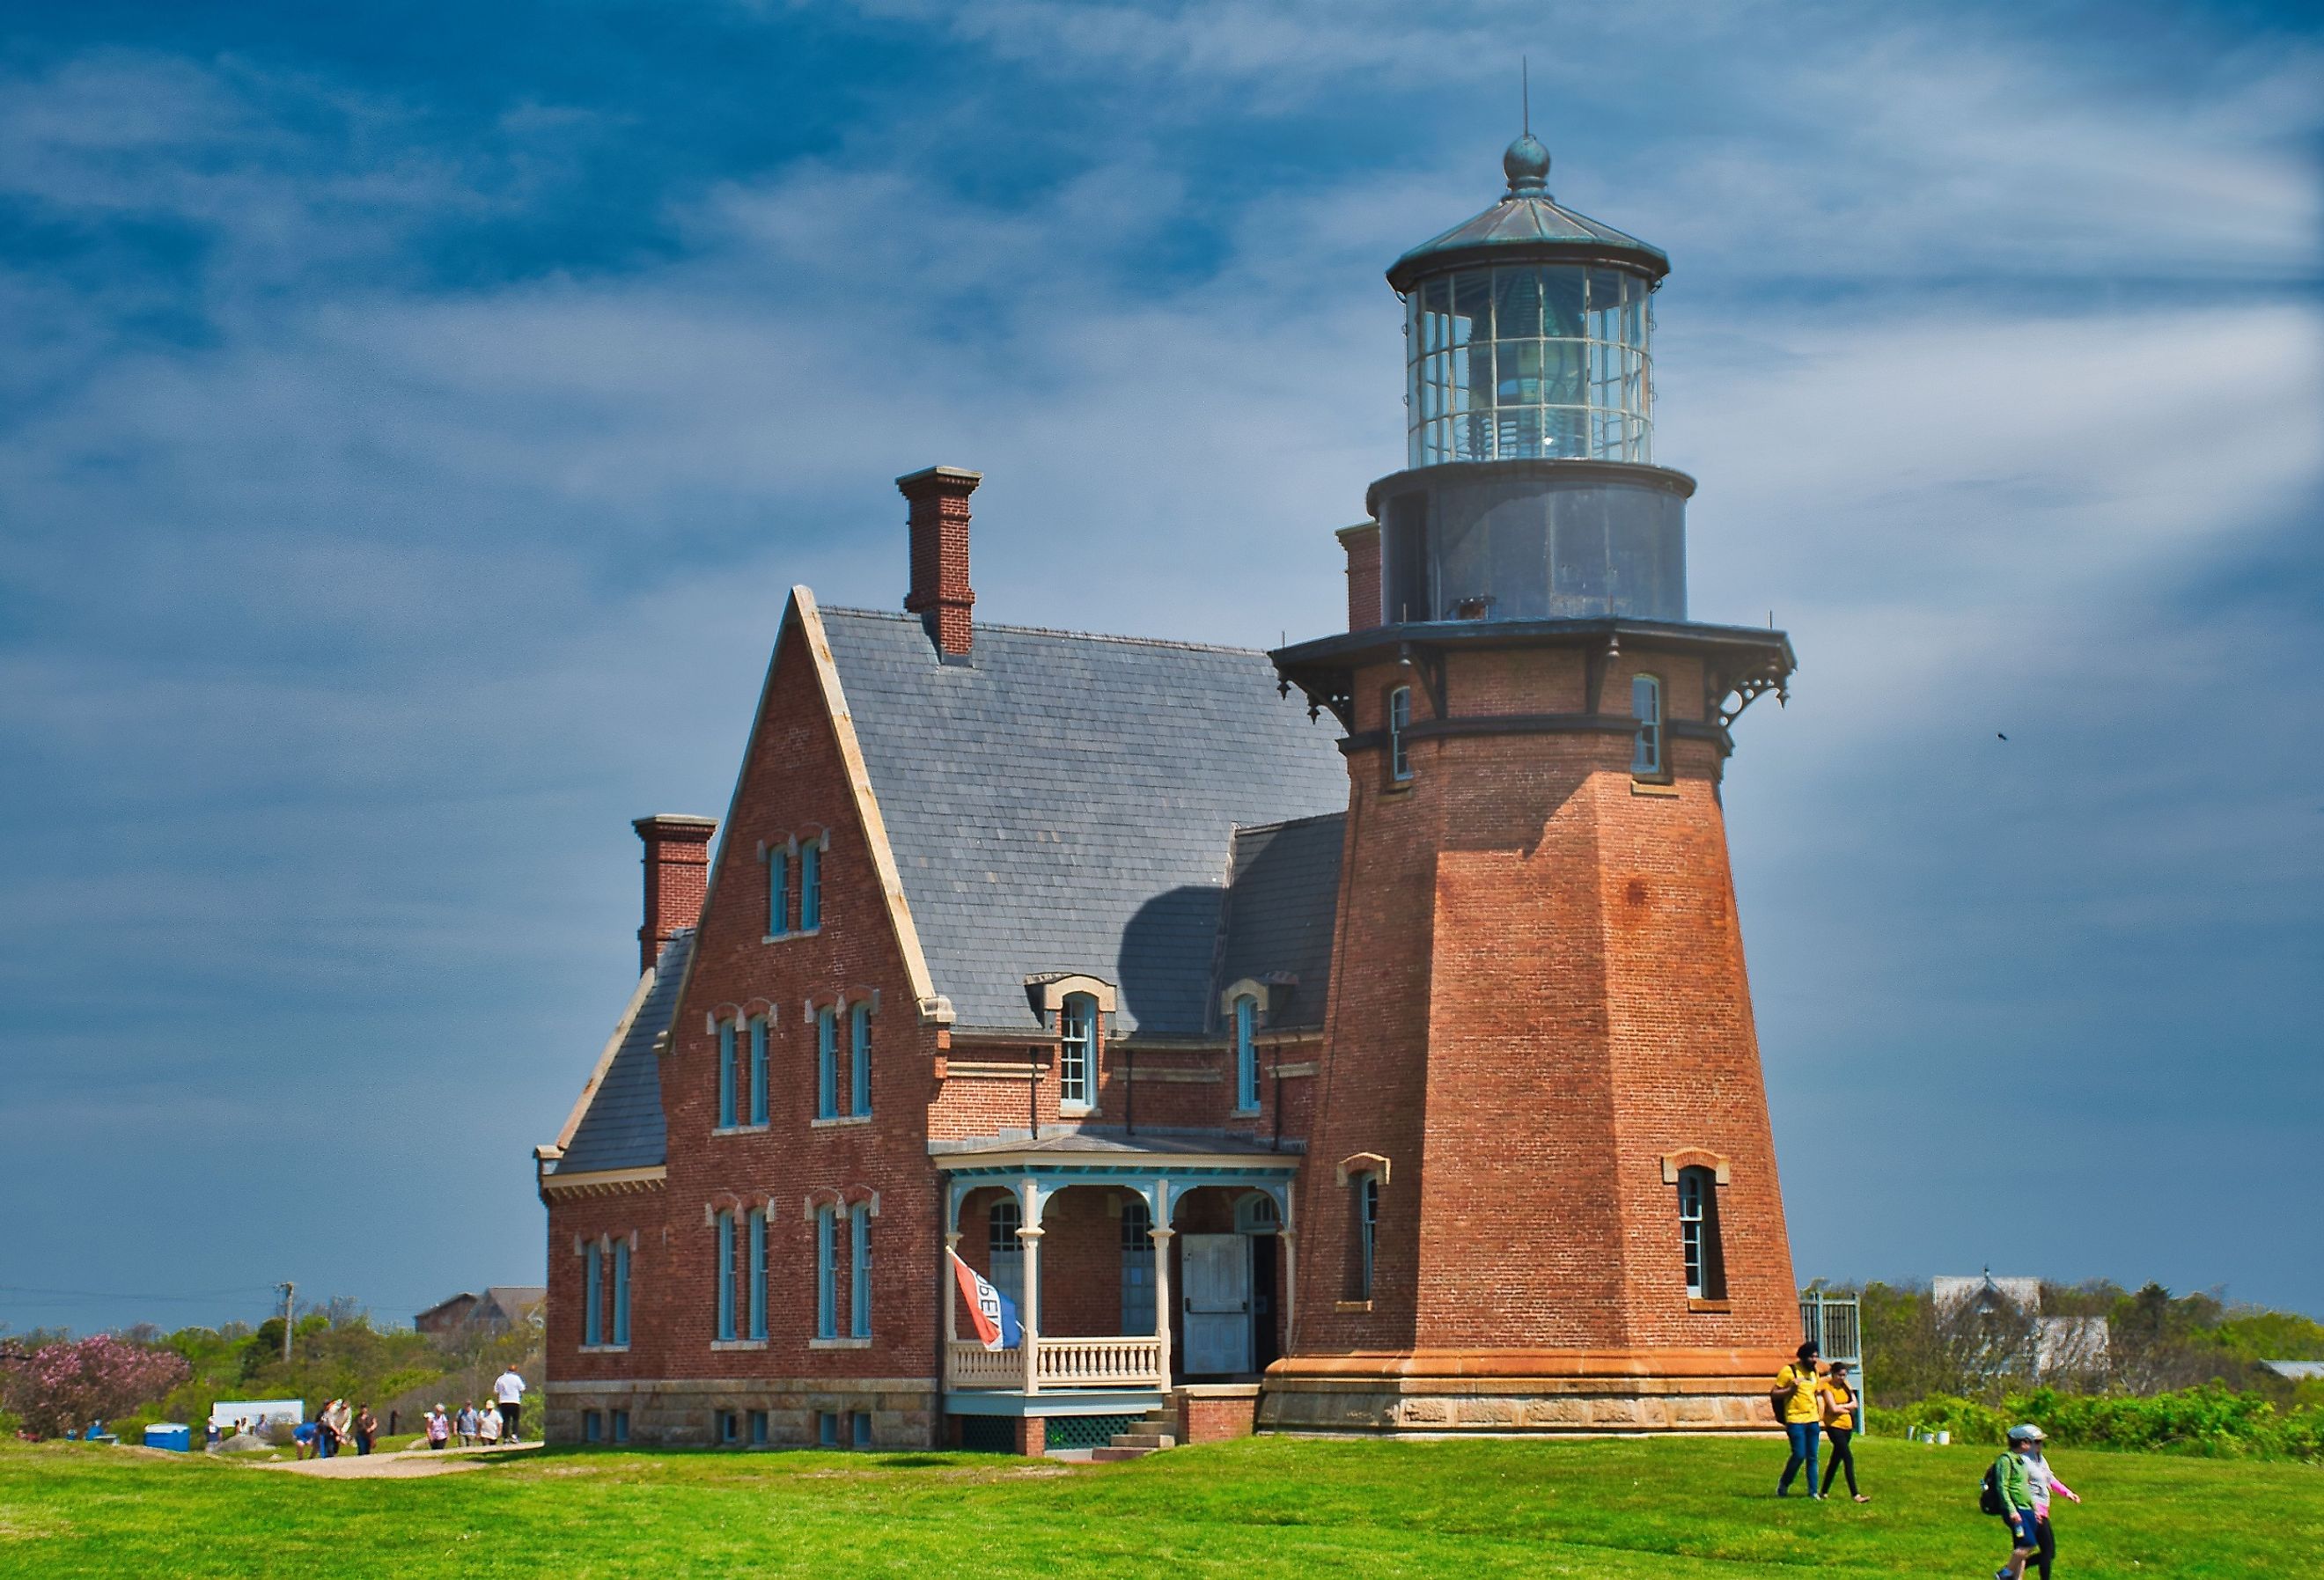 People visiting Block Island's South East Lighthouse, New Shoreham, Rhode Island.